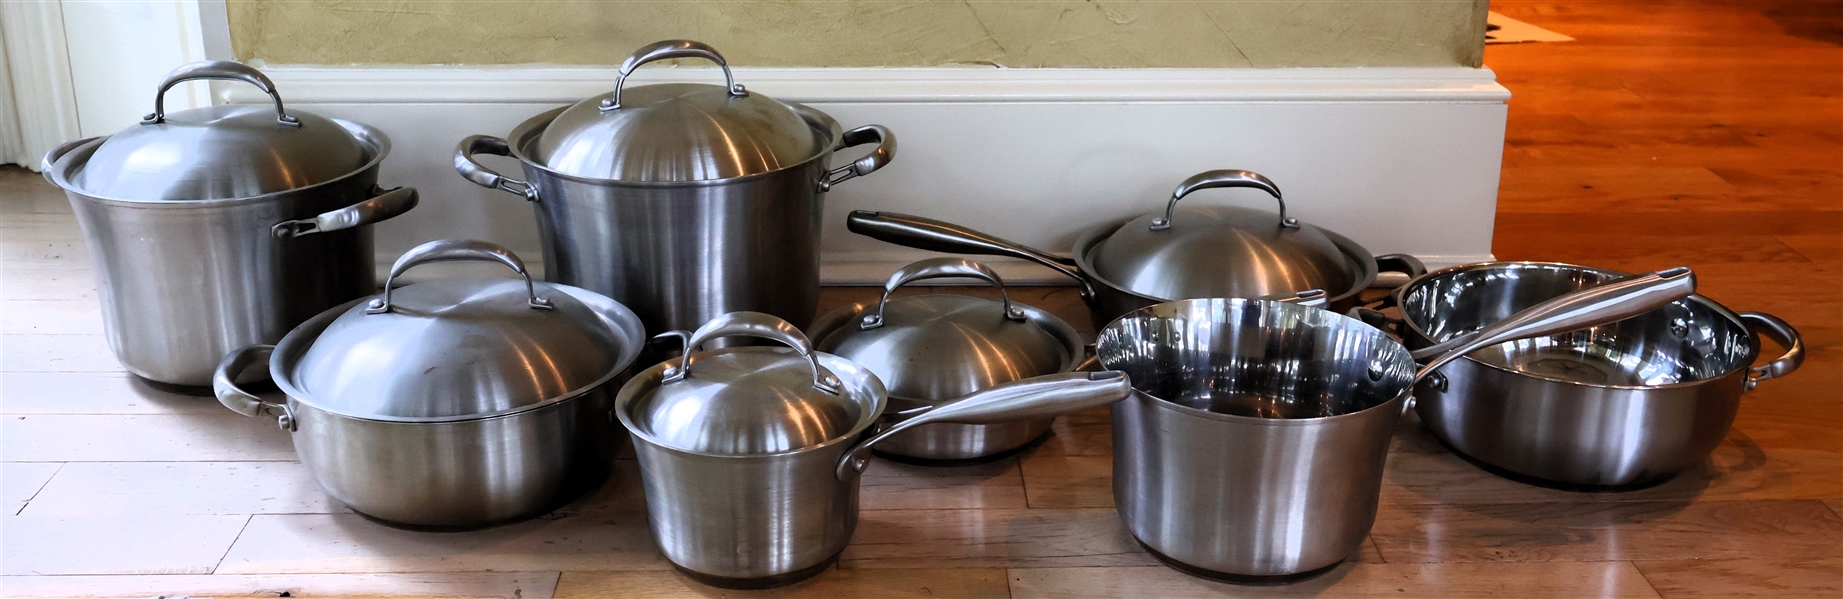 8 Pieces of Technique Cookware with 6 Interchangeable Lids - Pots and Pans Include 6 1/2 Quart 8 Quart, 8" Skillet, and 1 1/2 Quart Sauce Pan